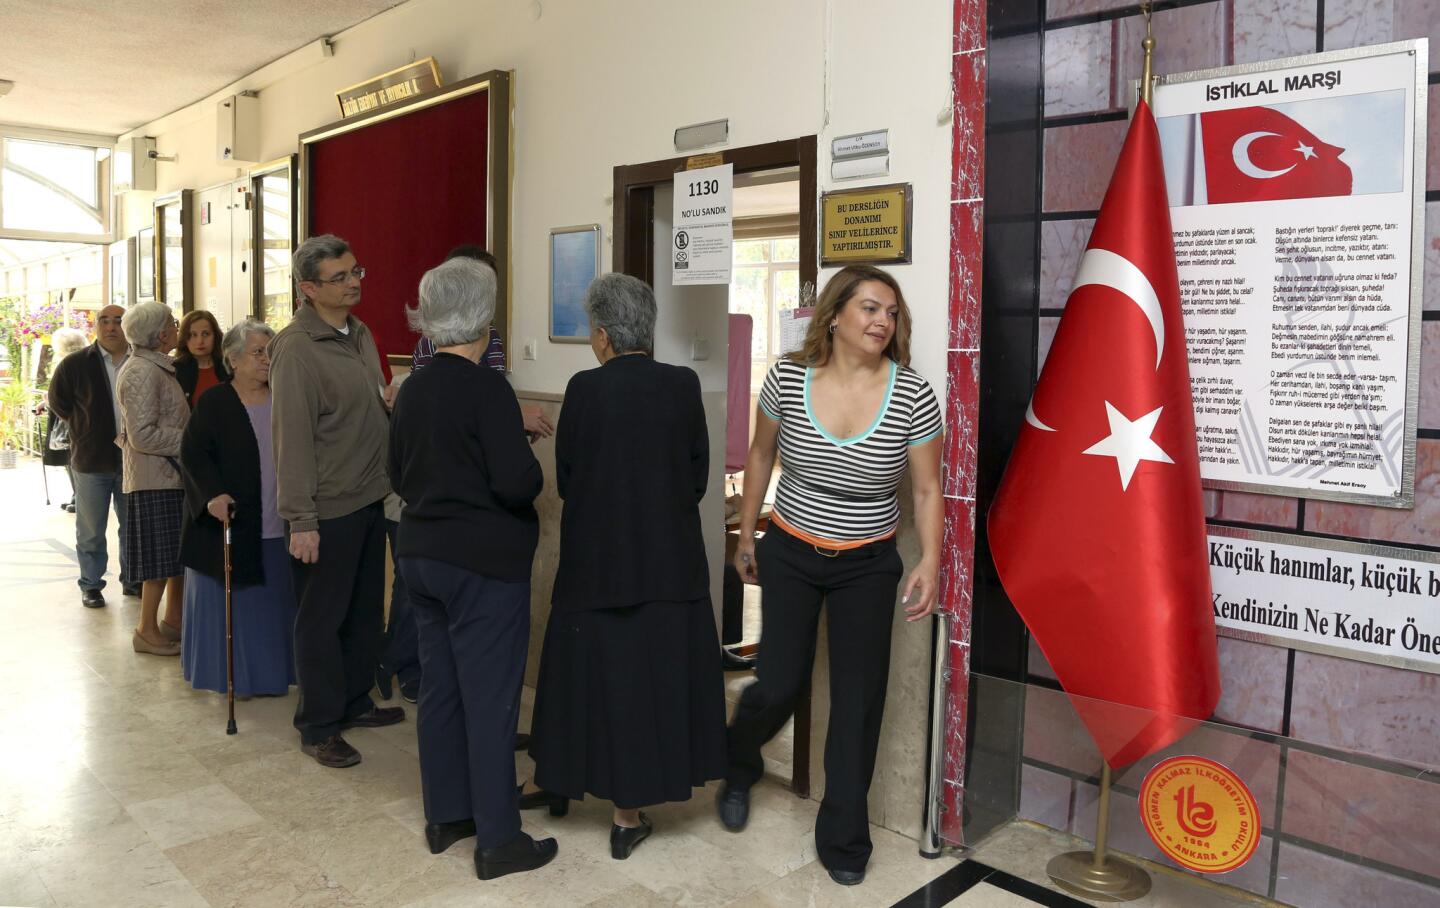 Election in Turkey